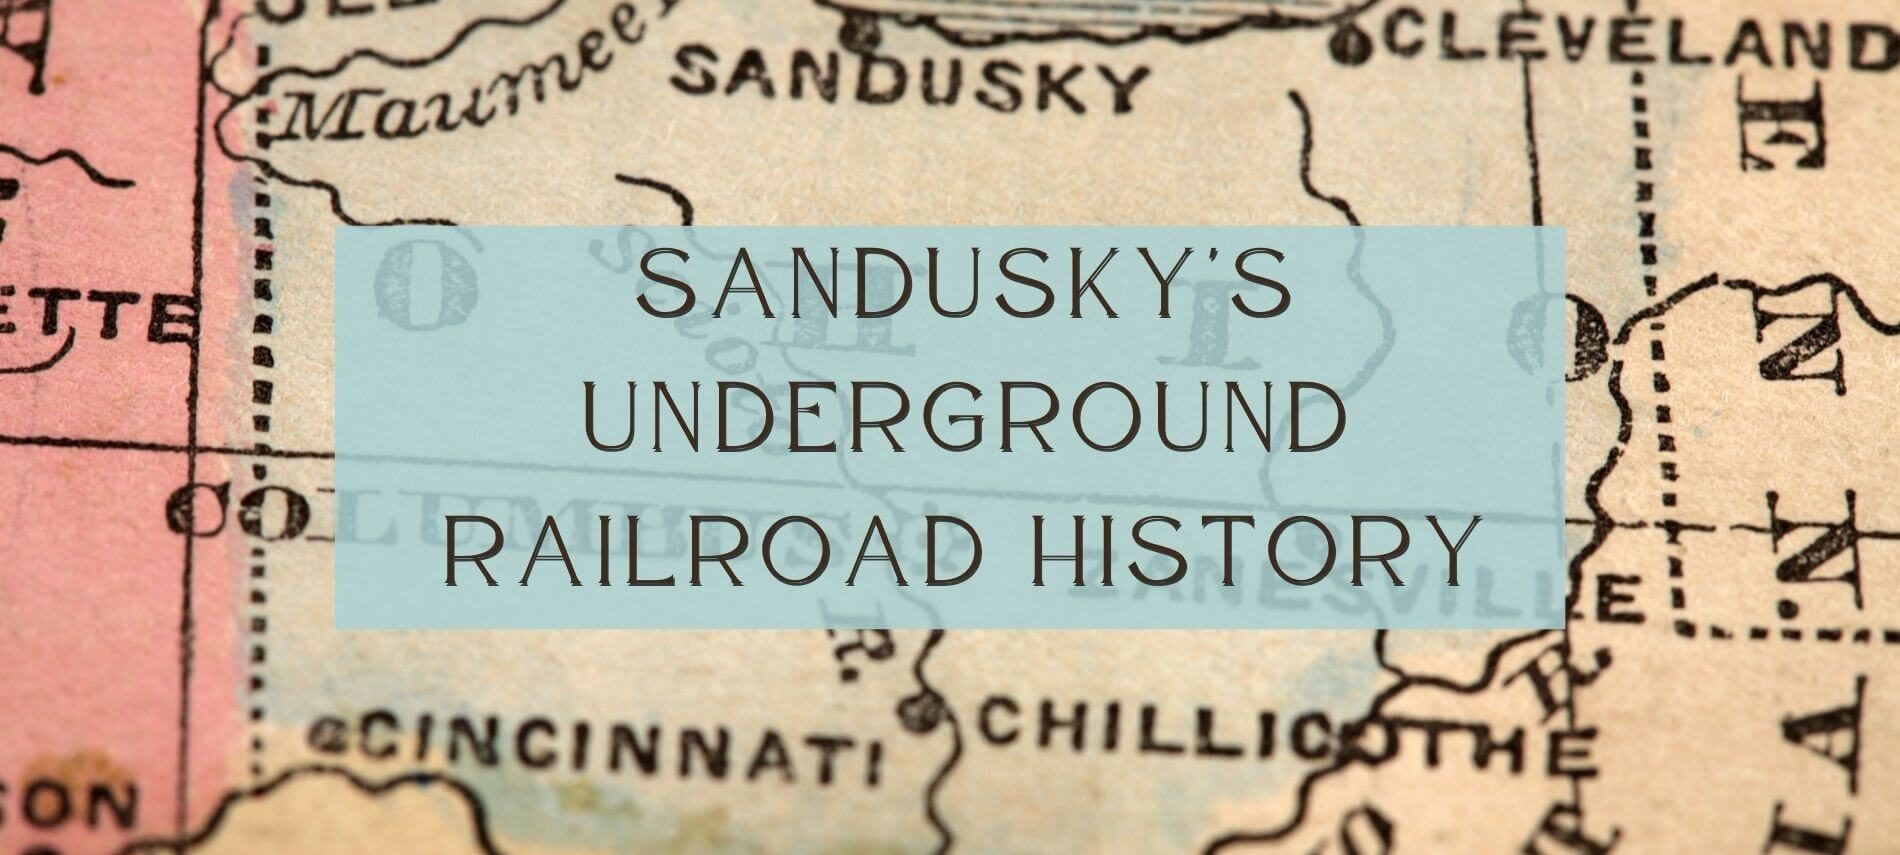 Map of OHio with words "Sandusky's Underground Railroad History"